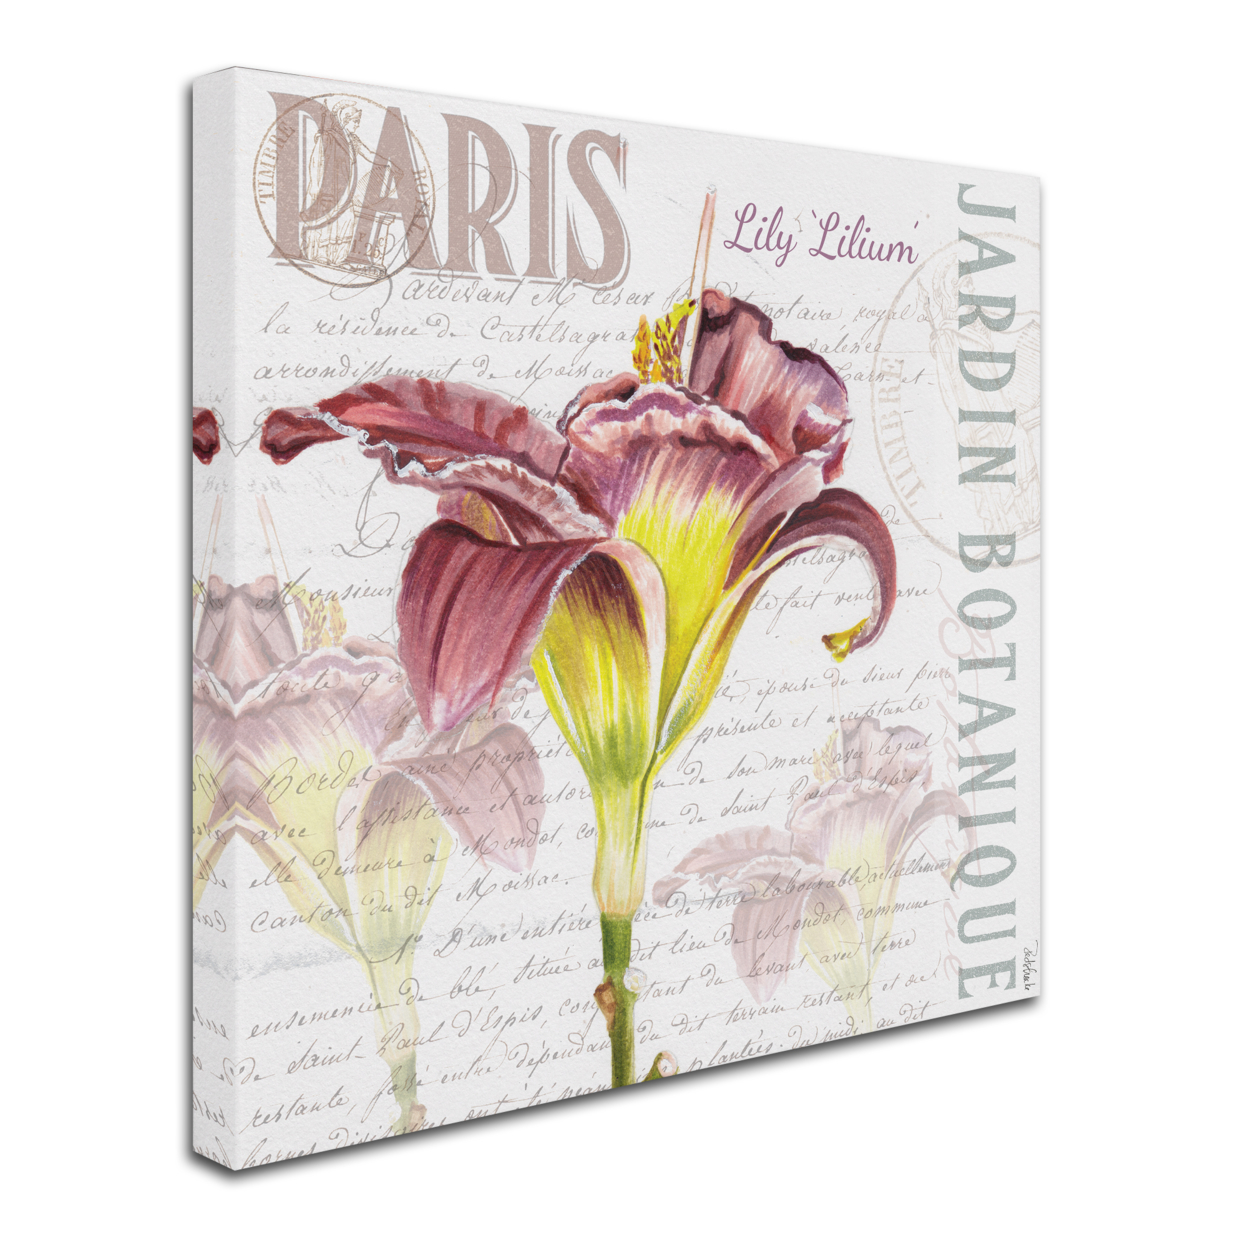 Jennifer Redstreake 'Paris Botanique Lily Burgundy' Huge Canvas Art 35 X 35